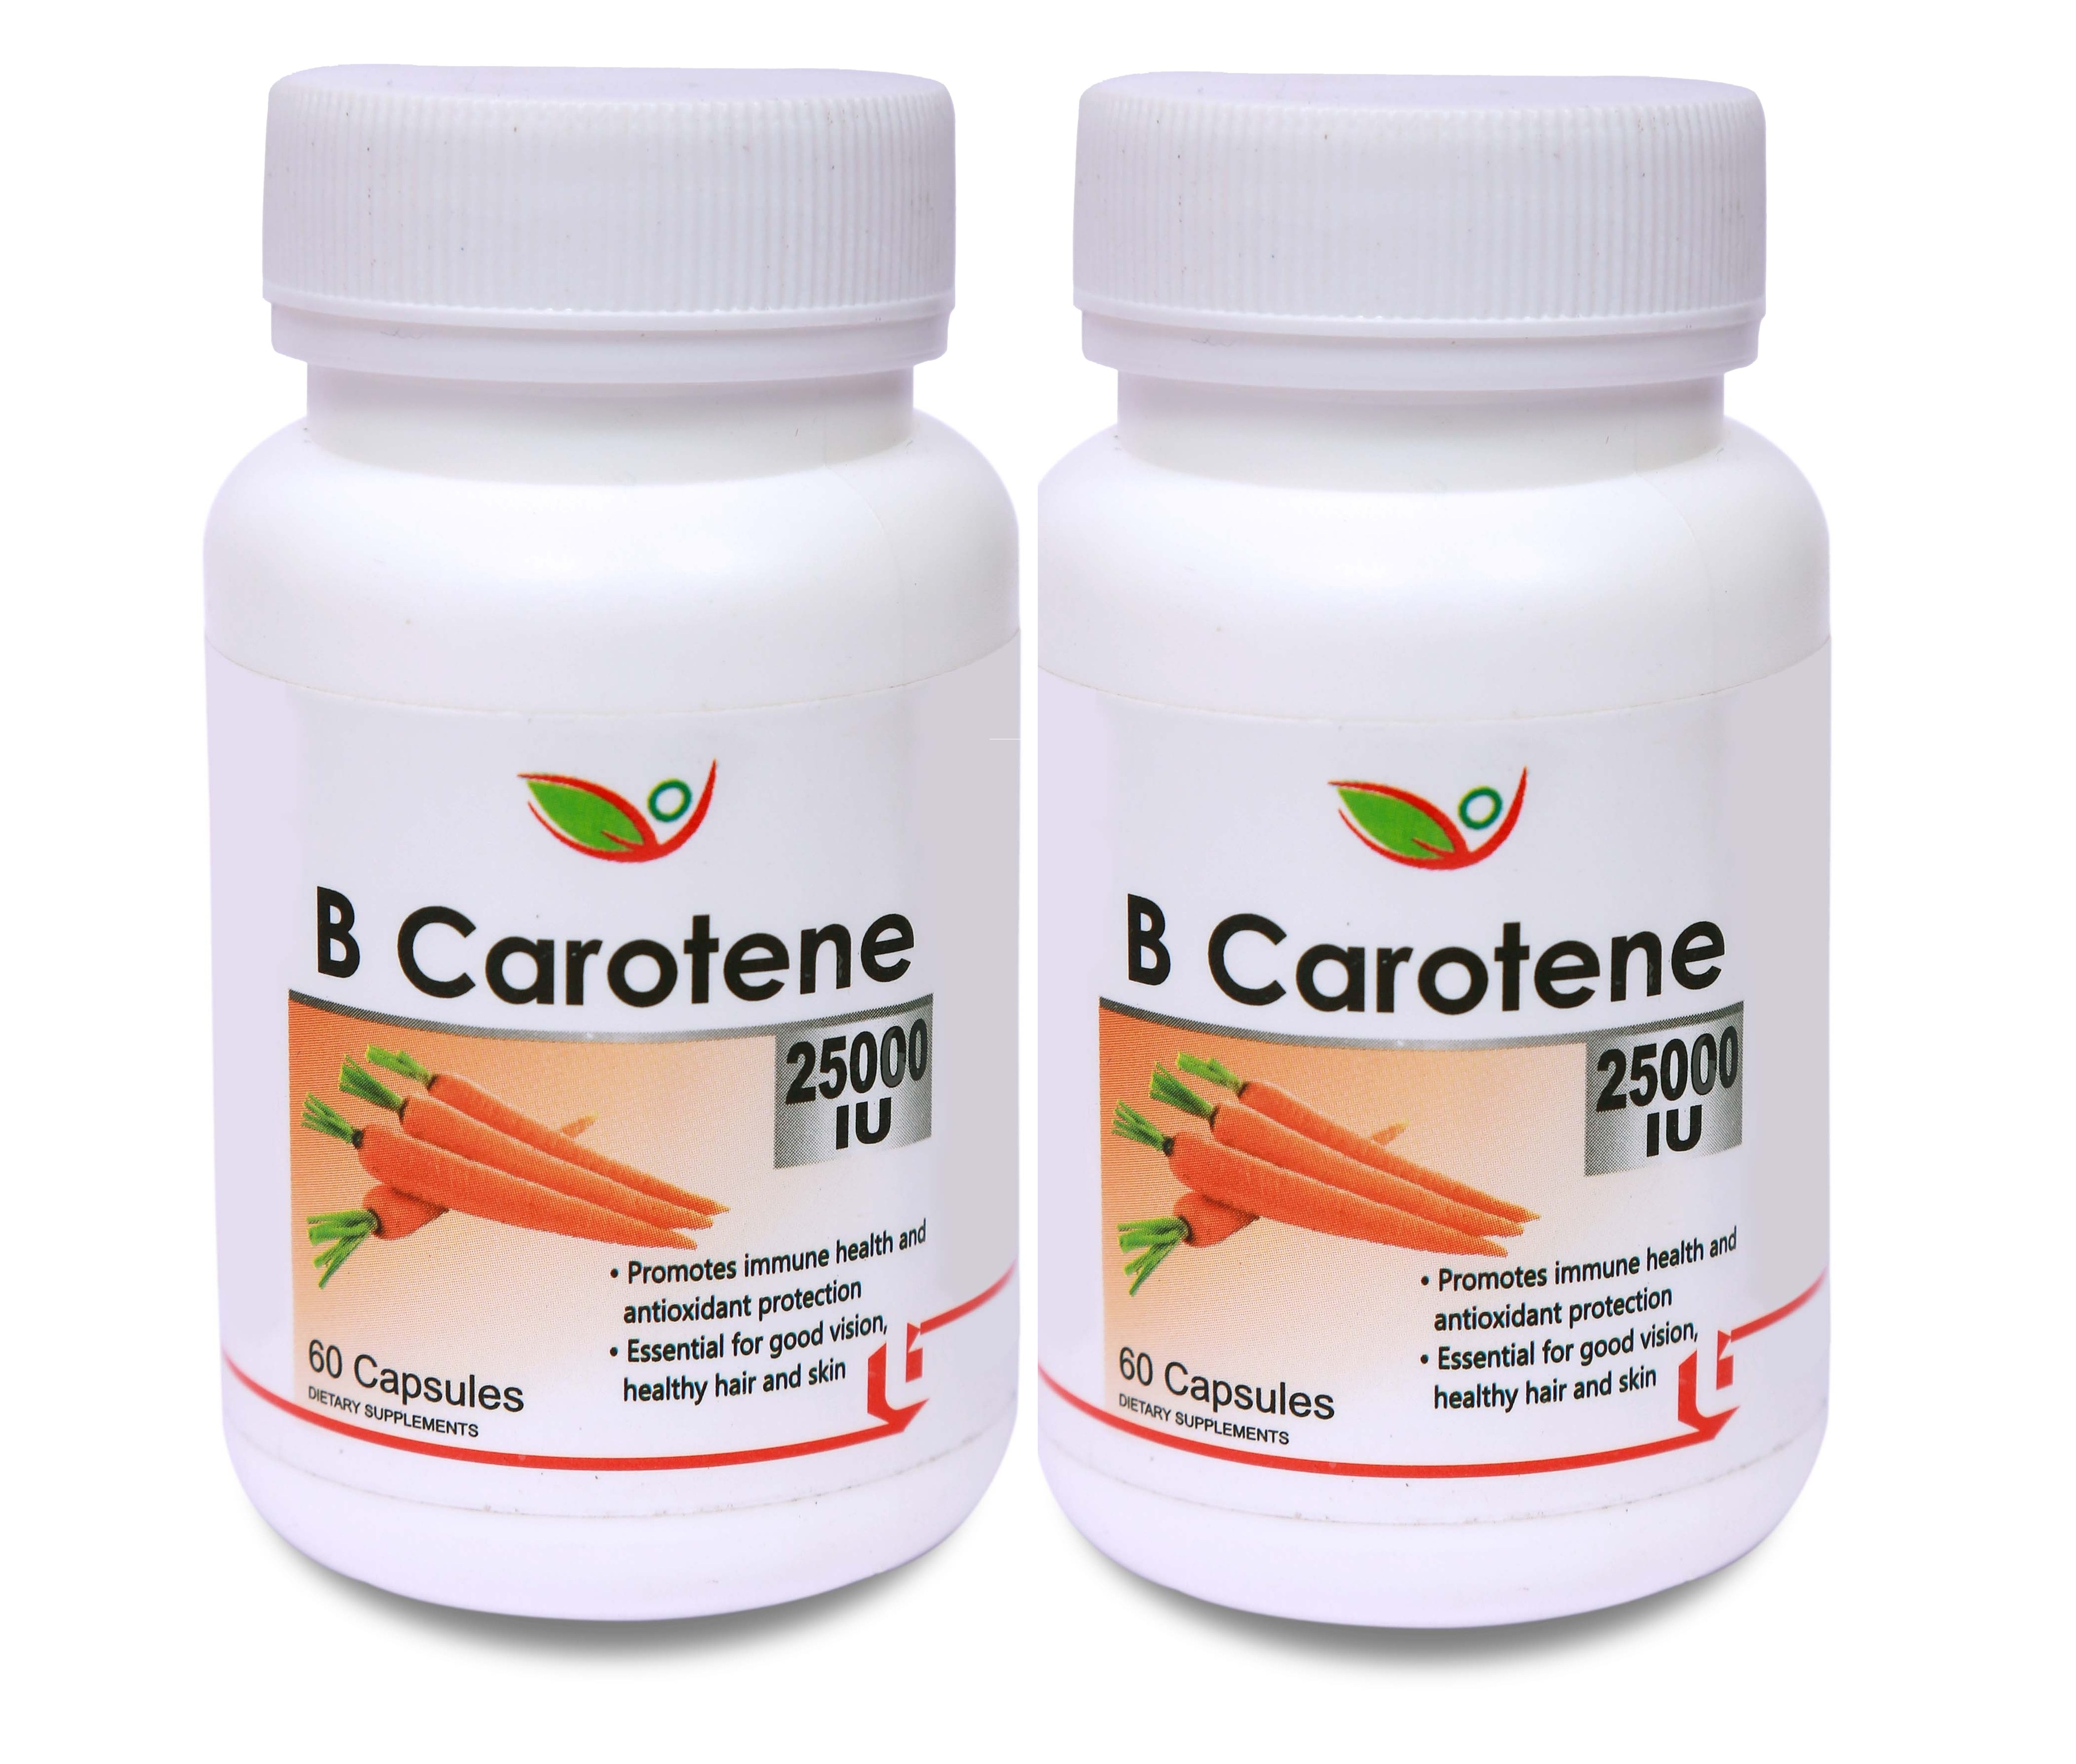 Beta carotene and vitamin a